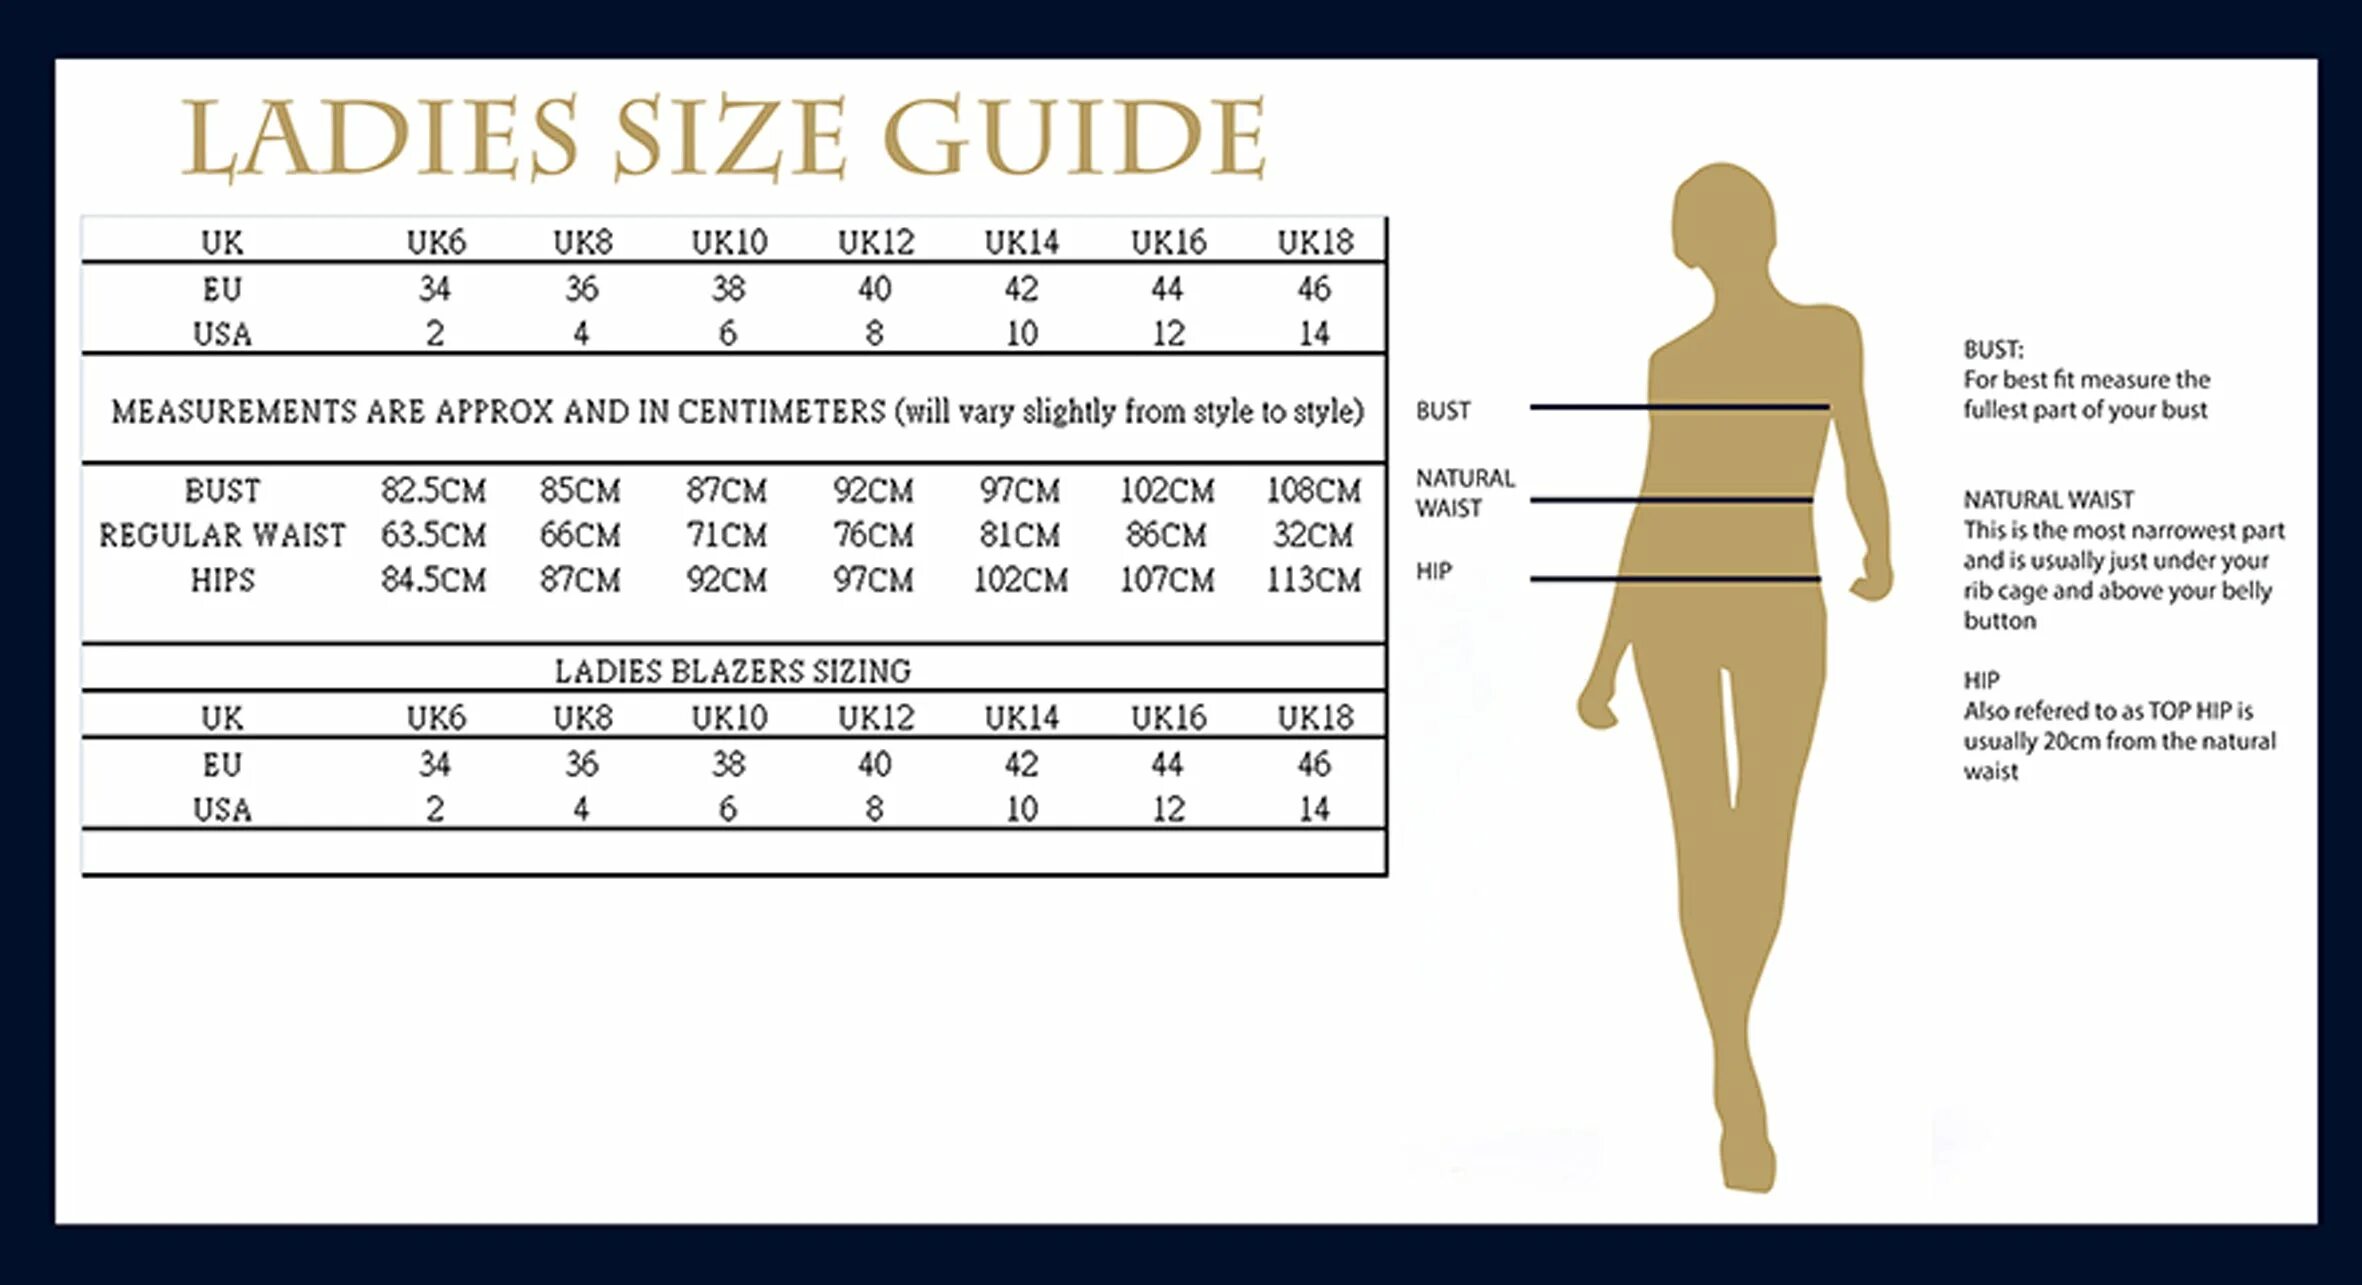 Us 06. Размерная сетка uk 12. Размерная сетка Geox мужская одежда. 8 Uk какой размер. Geox Размерная сетка женской одежды.